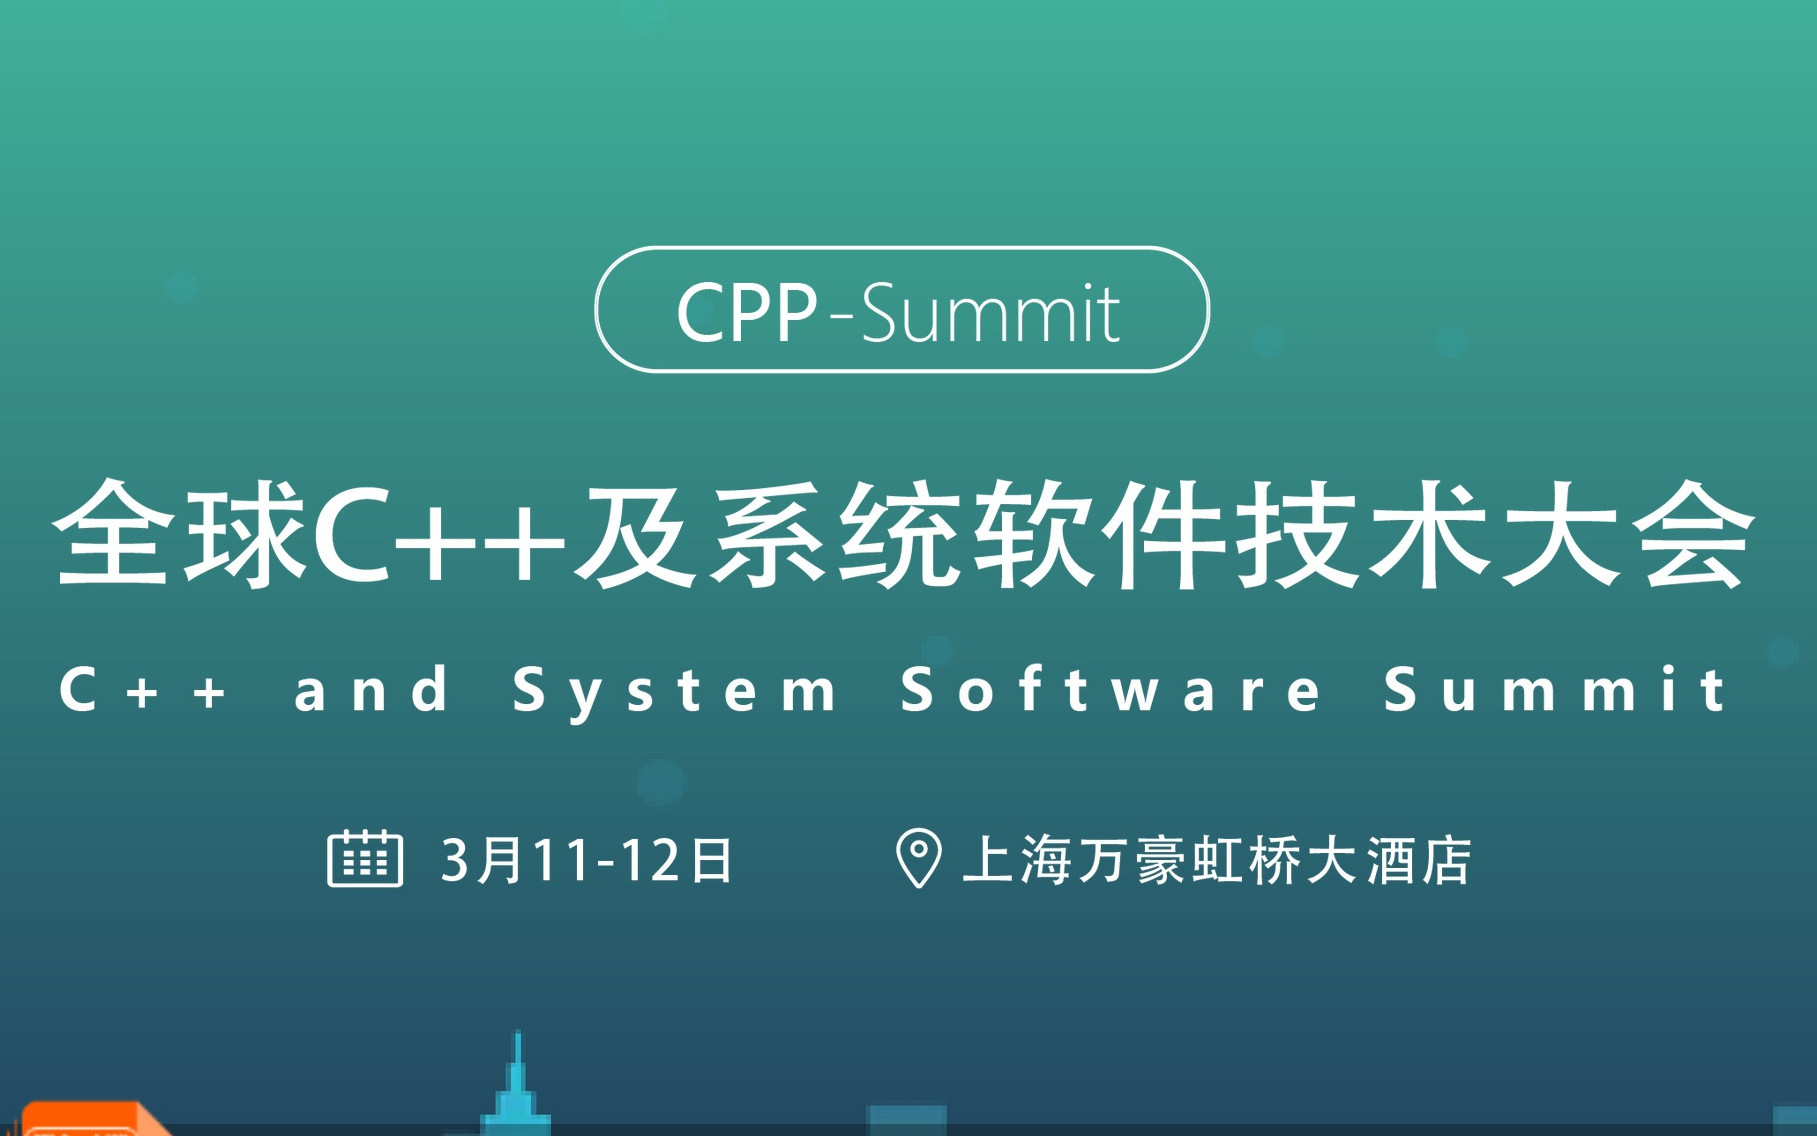 cpp-summit全球C++及系統軟件技術大會